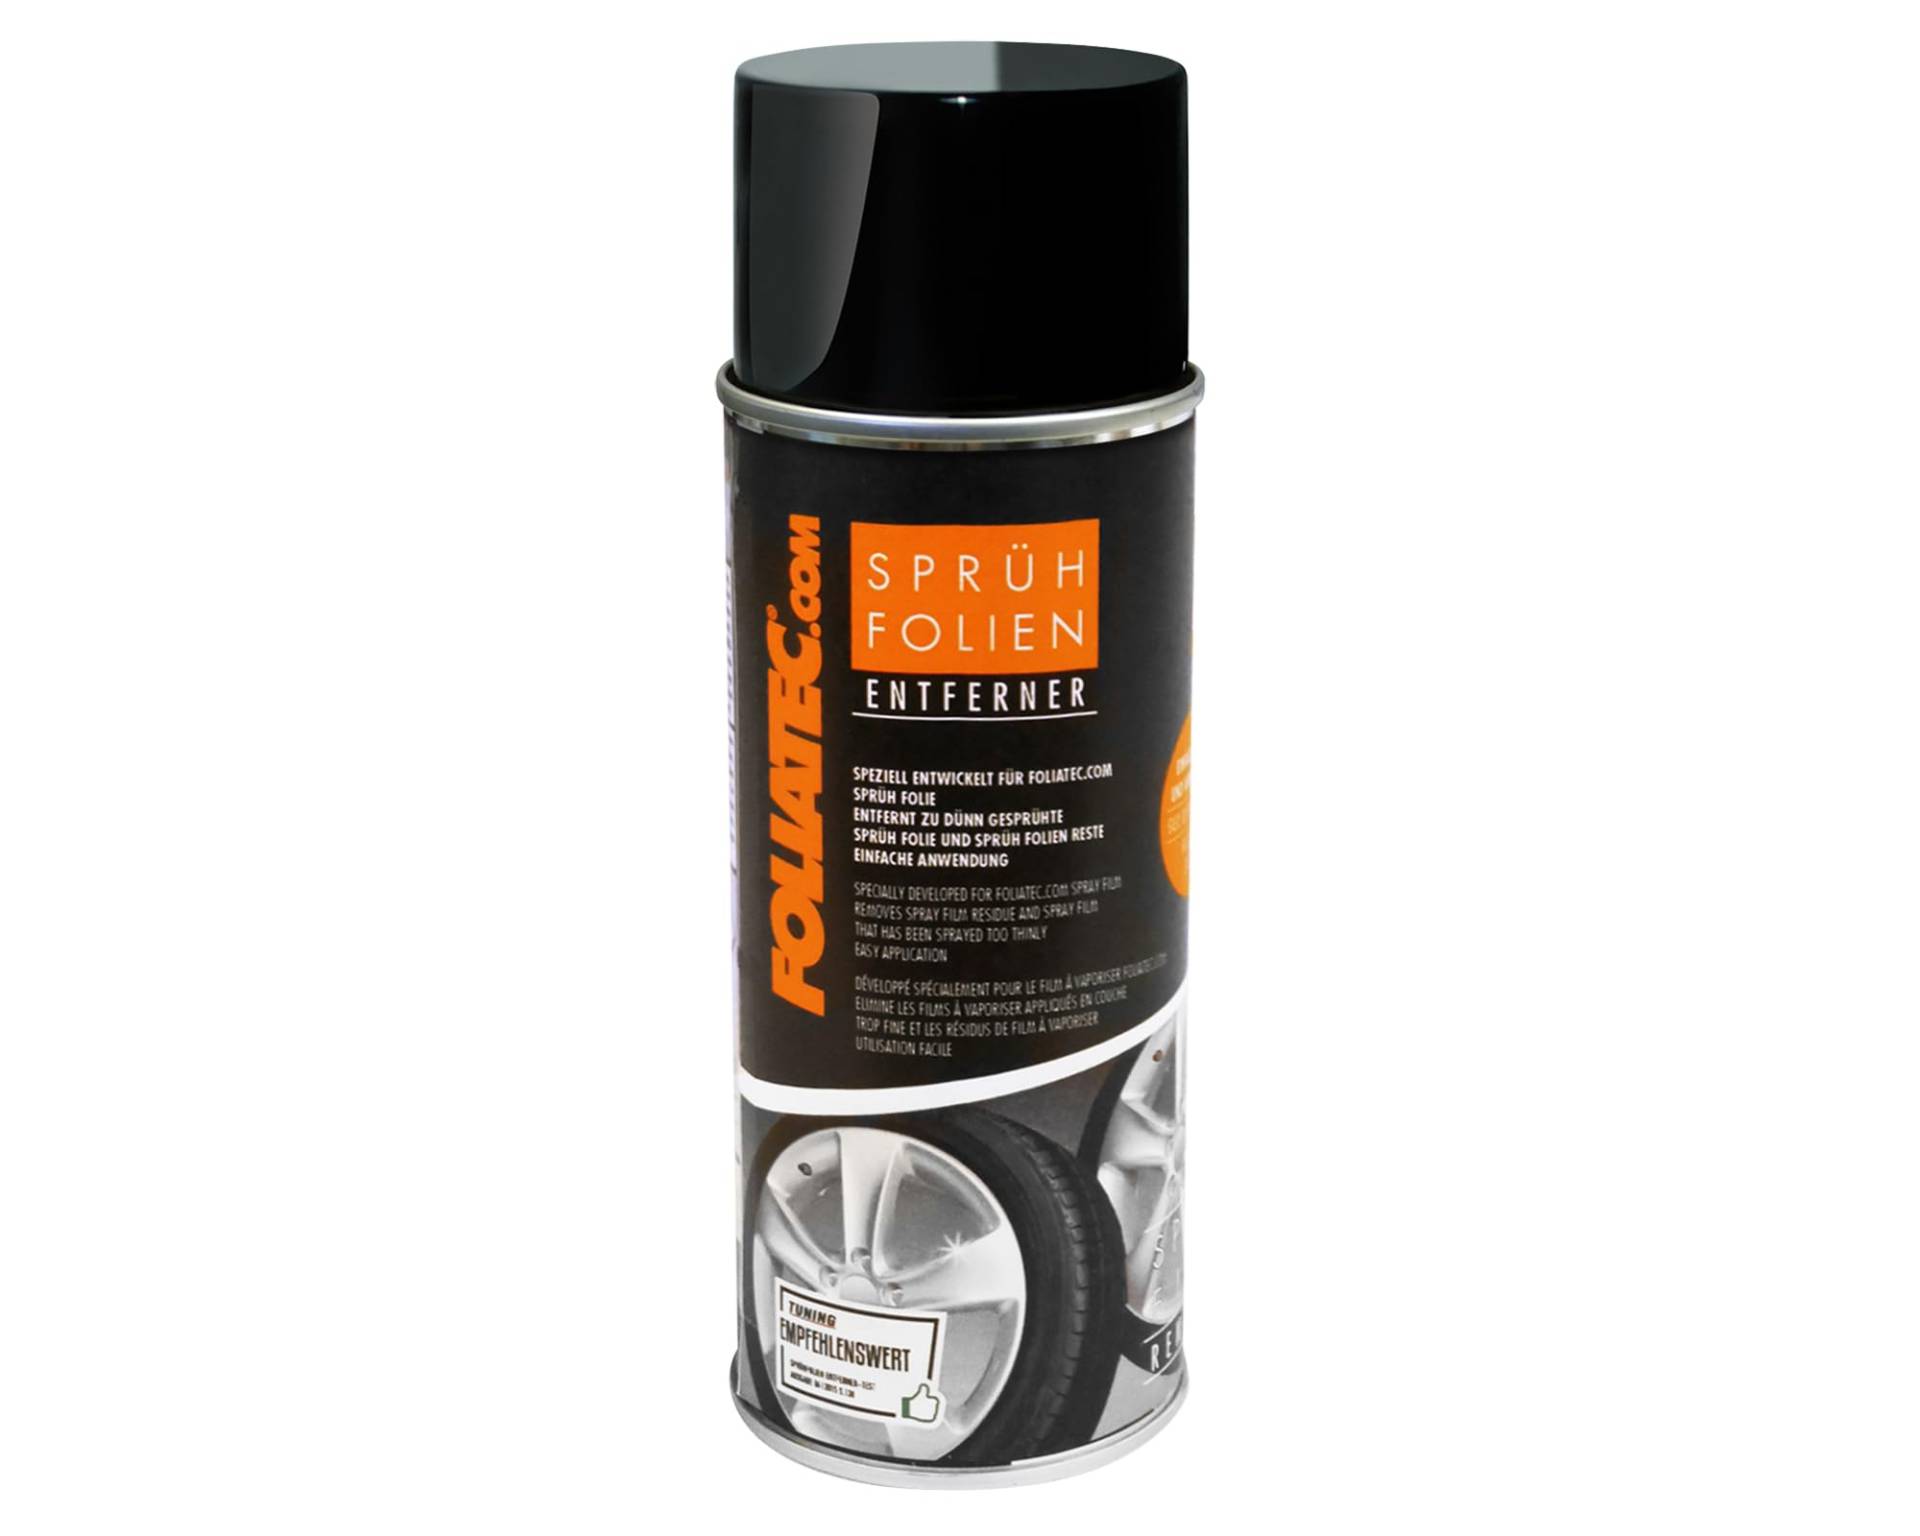 FOLIATEC Sprühfolie Entferner Spray Film Remover, 400 ml von Foliatec